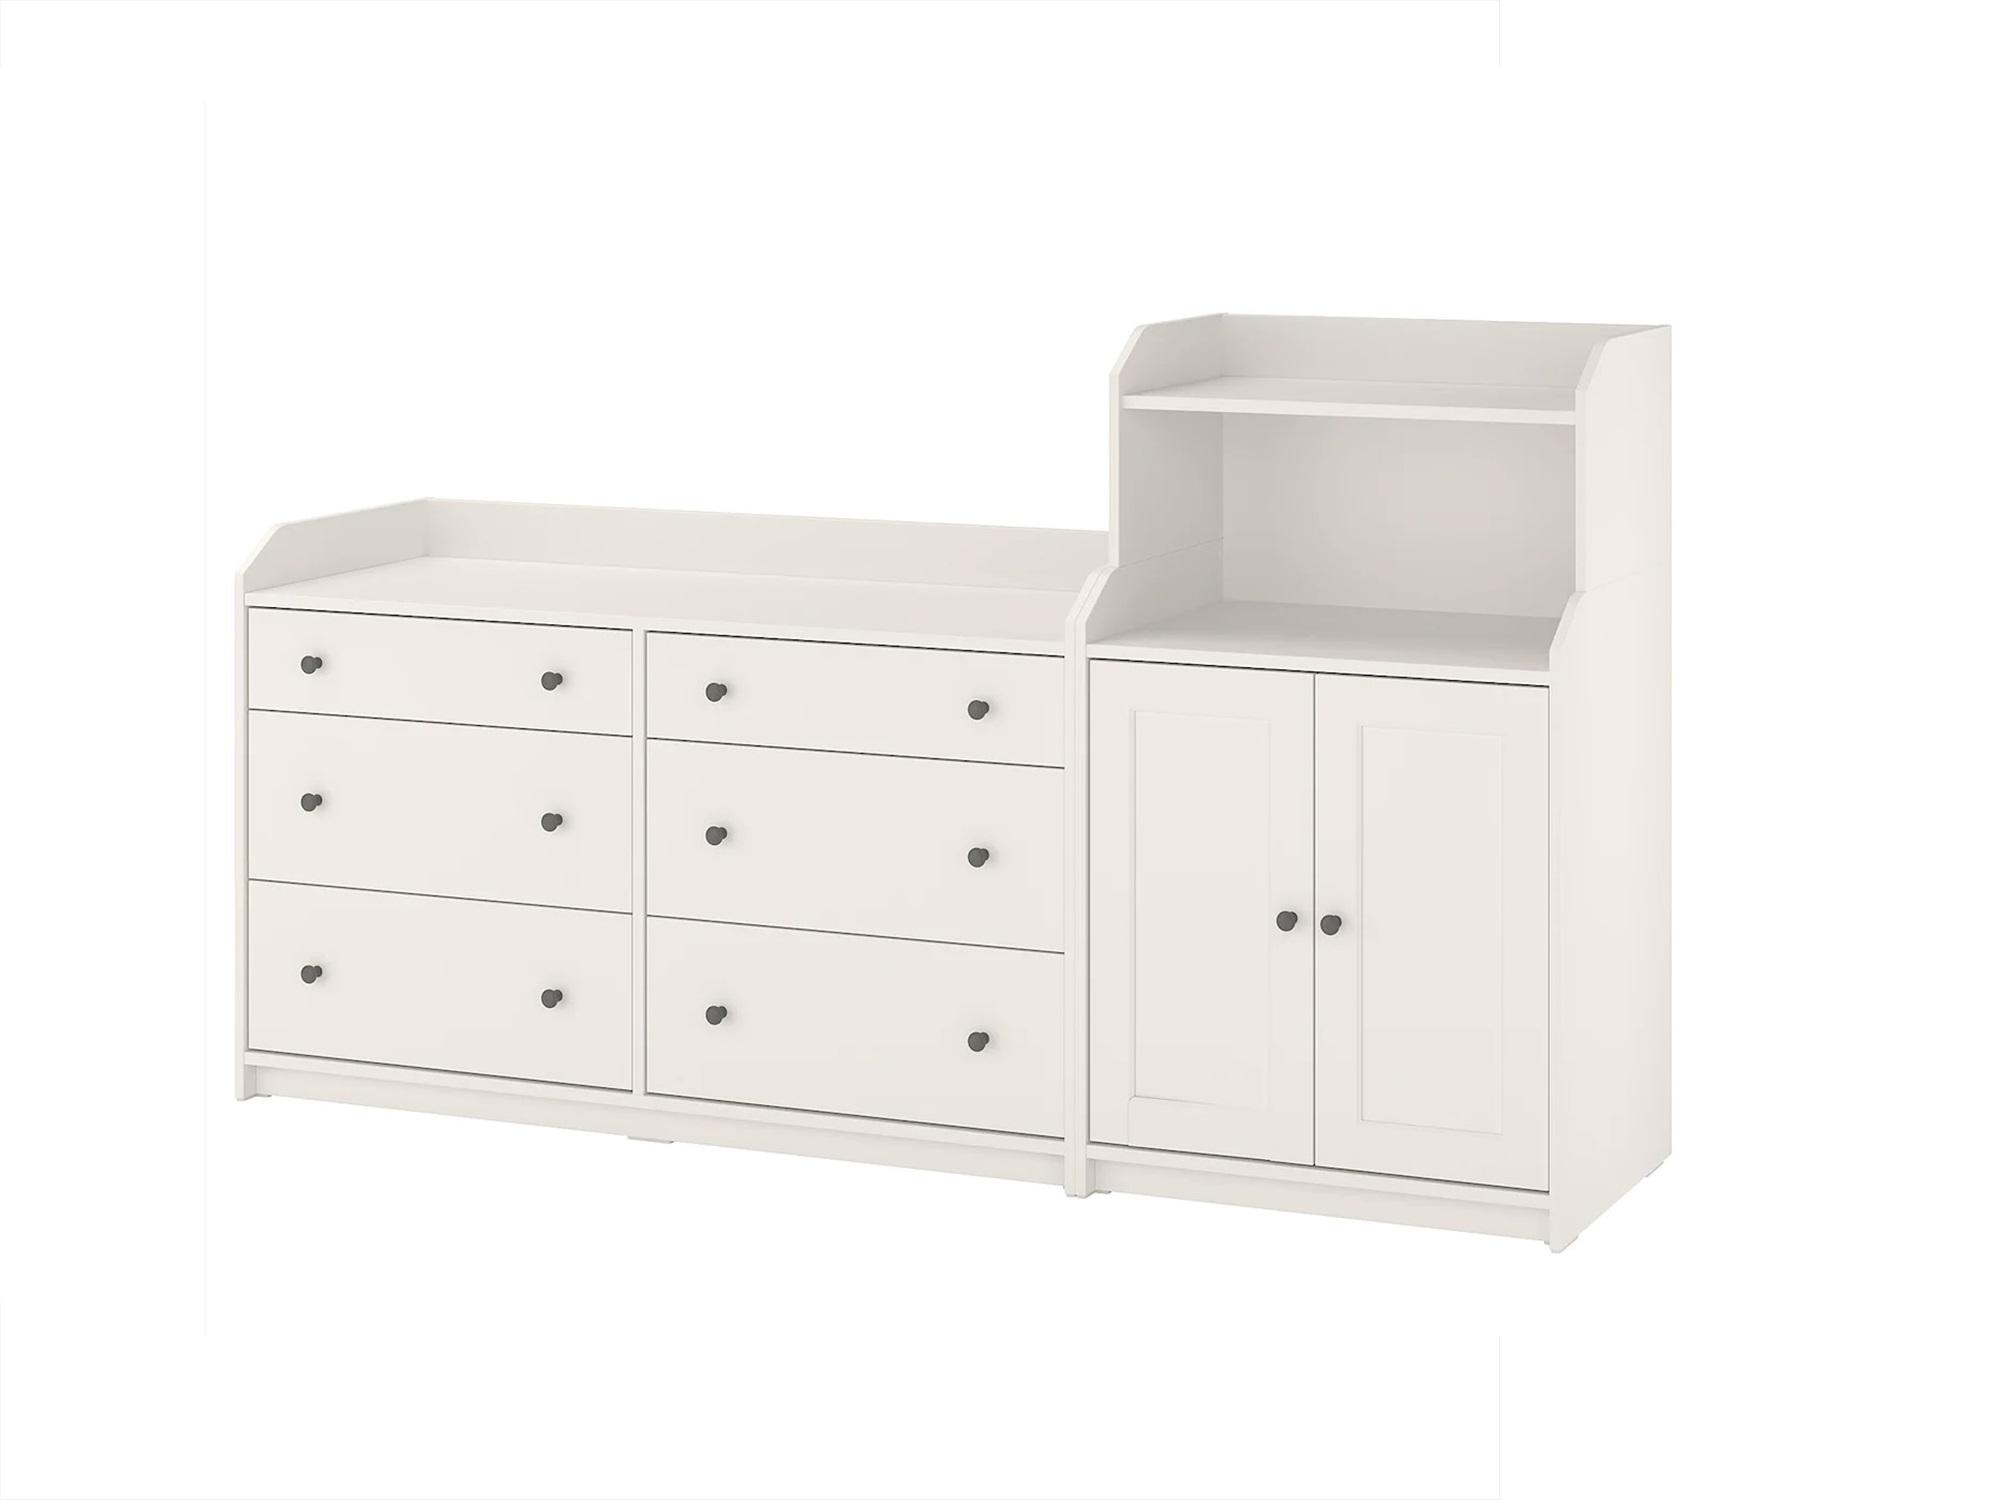 Изображение товара Комод Хауга 21 white ИКЕА (IKEA), 208x46x116 см на сайте adeta.ru